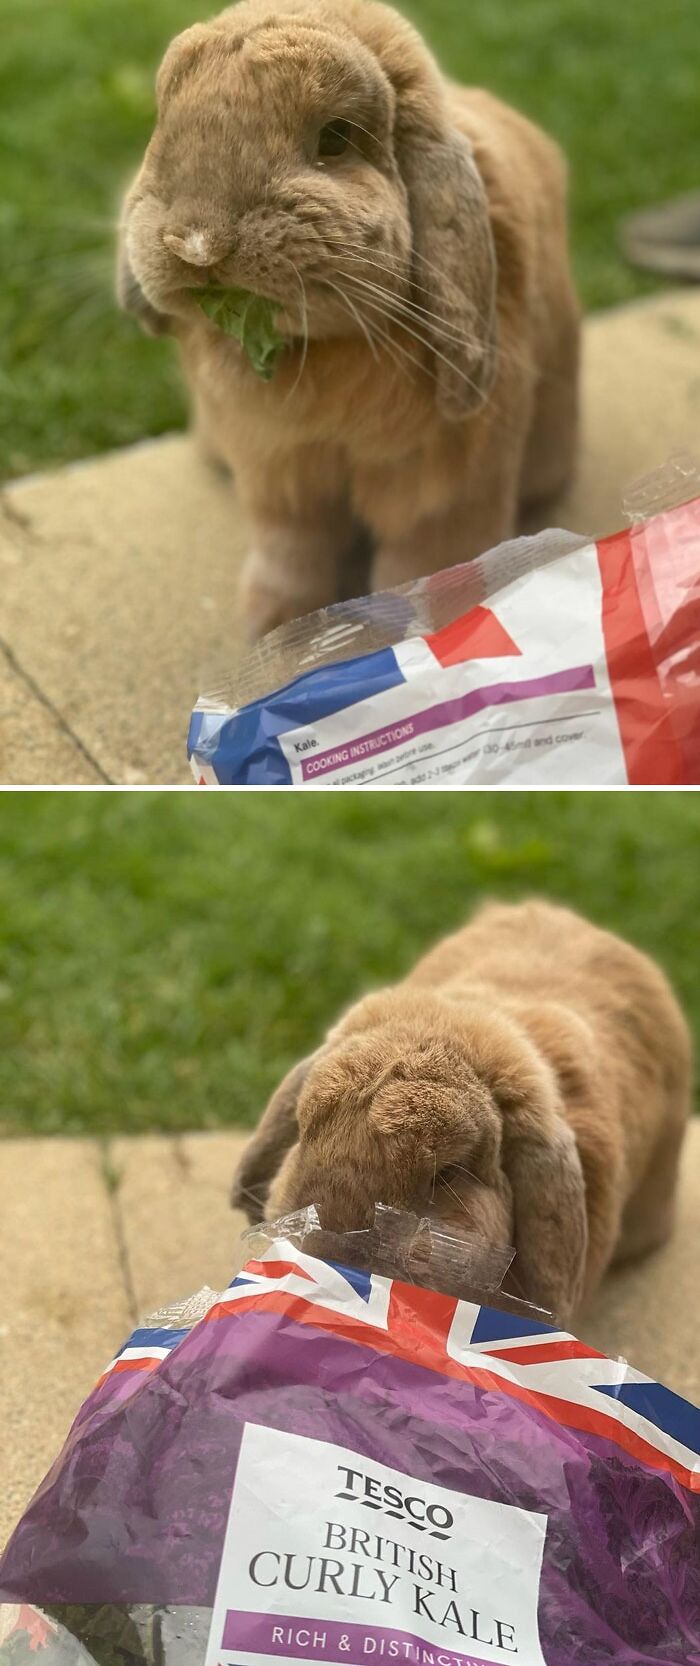 Just A Bunny Enjoying Some Snacks